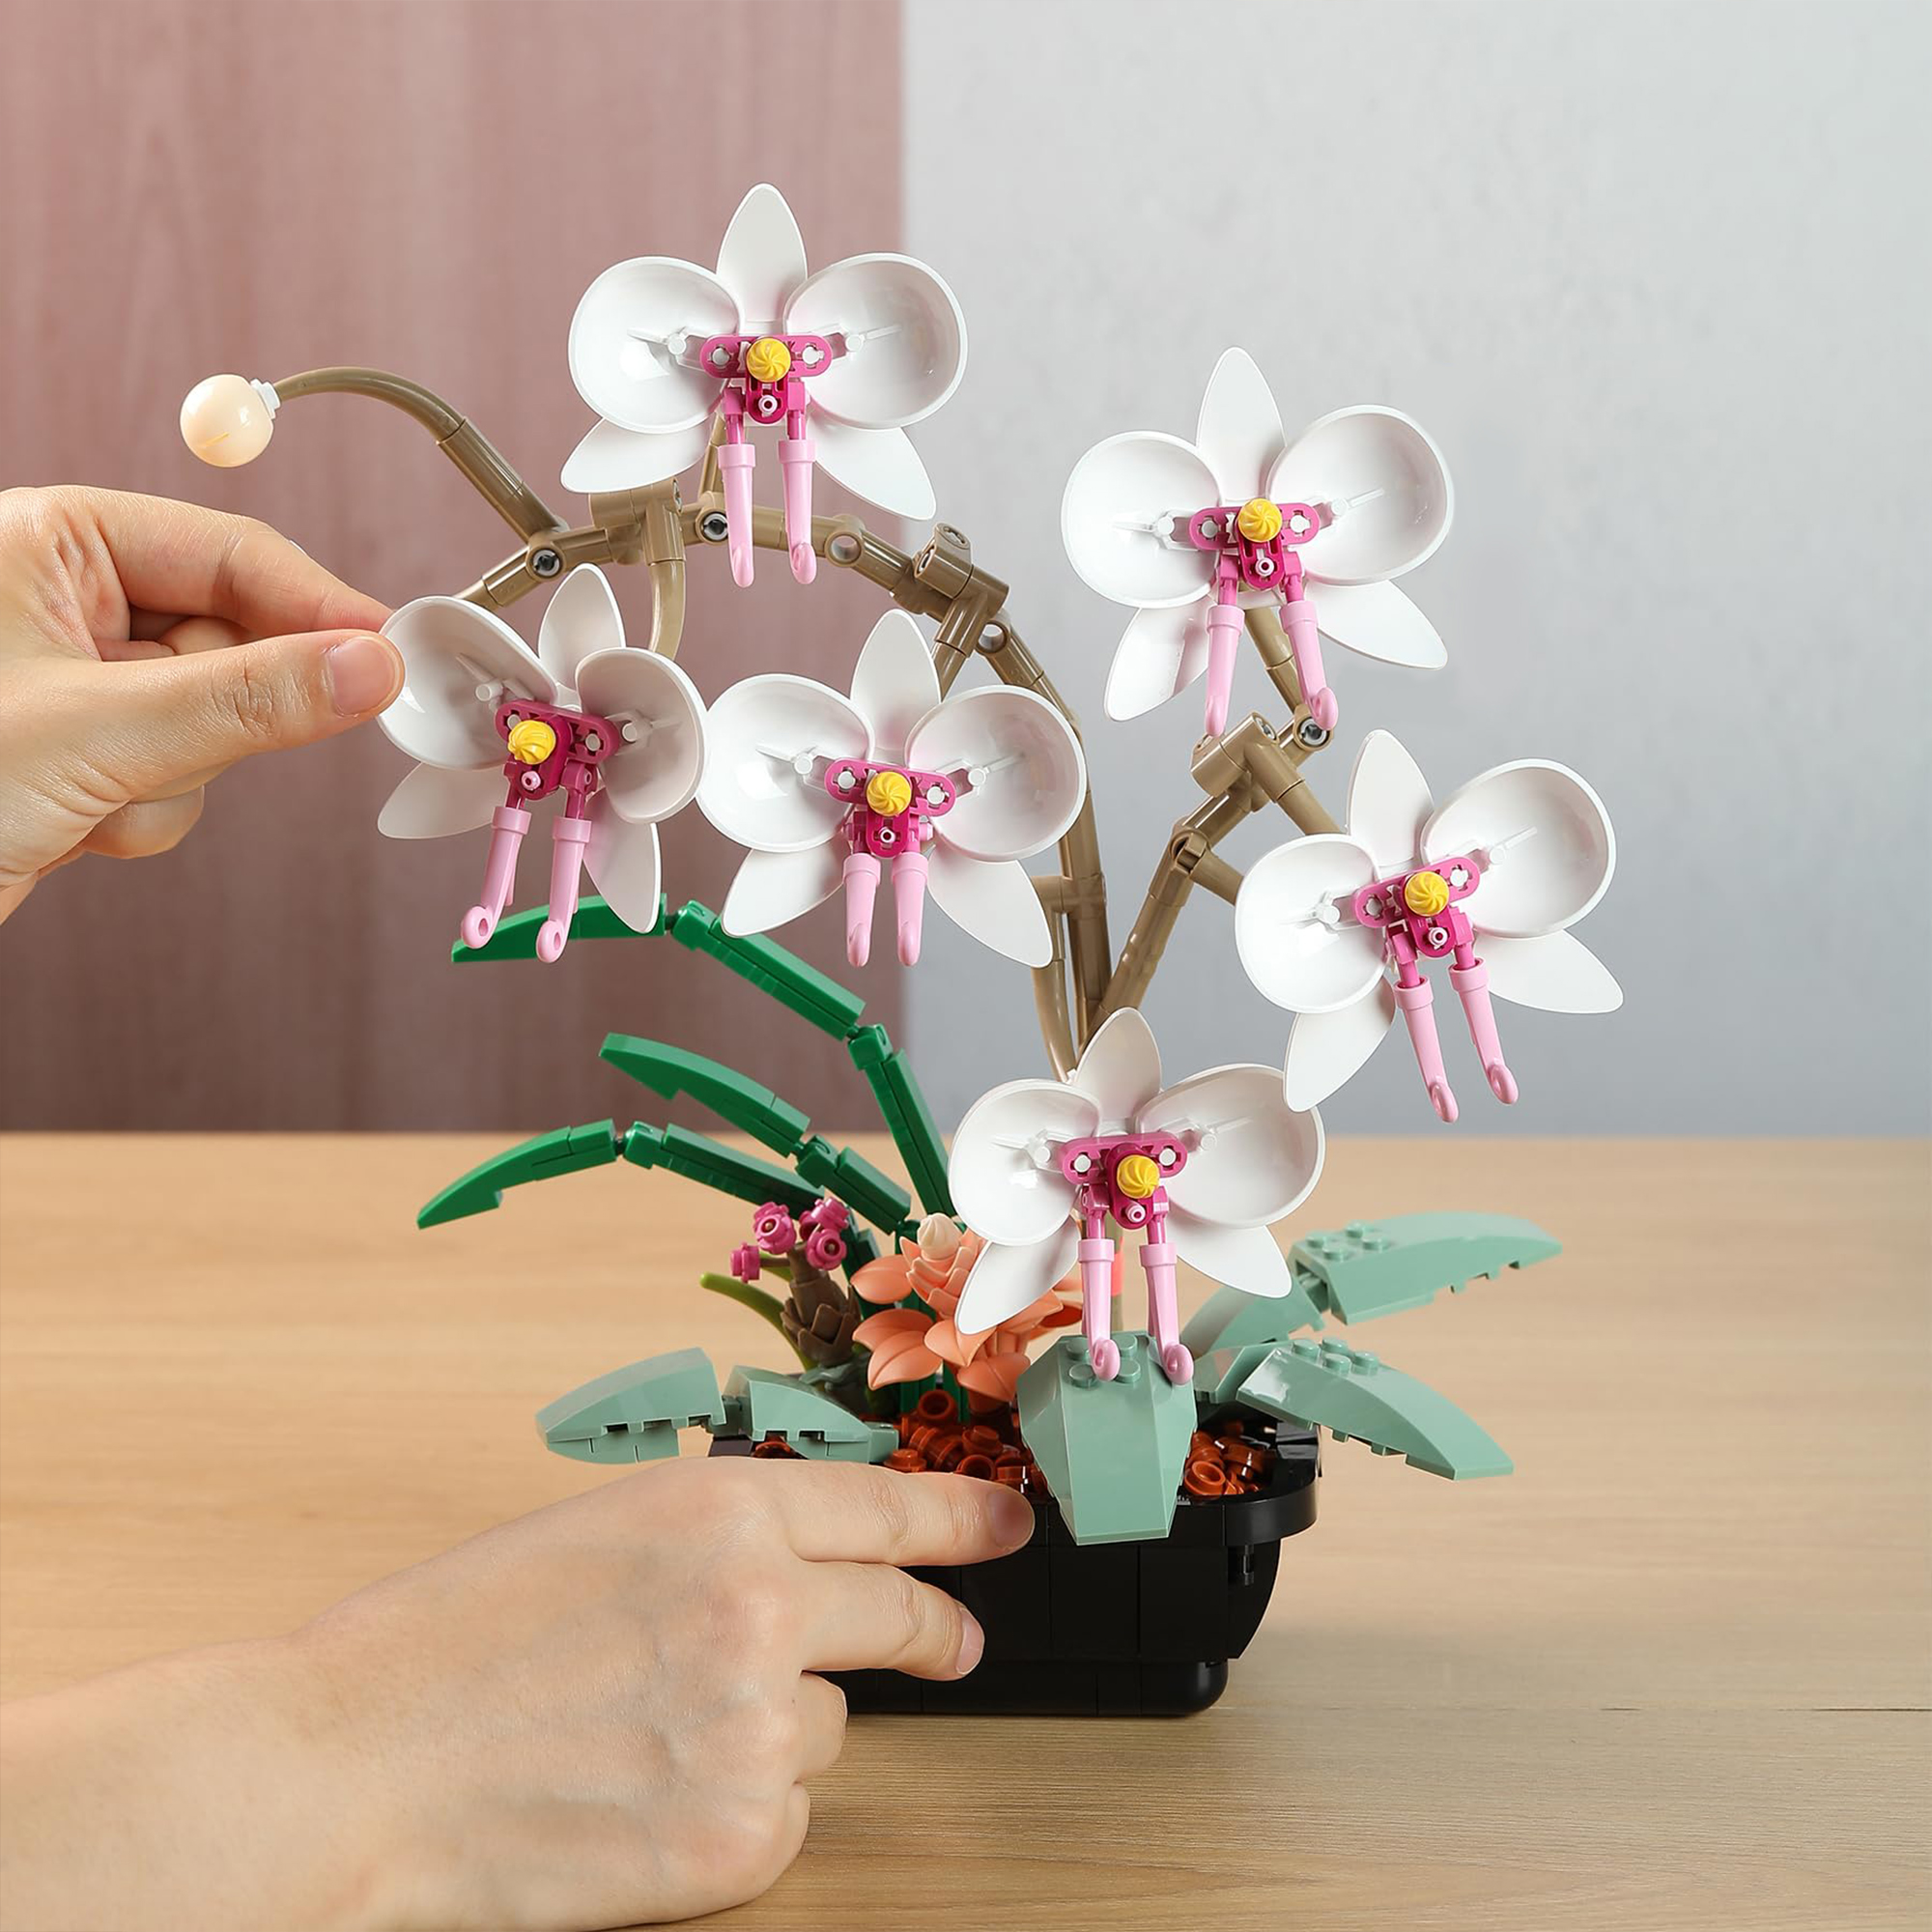 HI-Reeke Flower Building Block Set Orchid Botanical Bonsai Building Kit Toy Gift for Kid Adult White - image 3 of 6